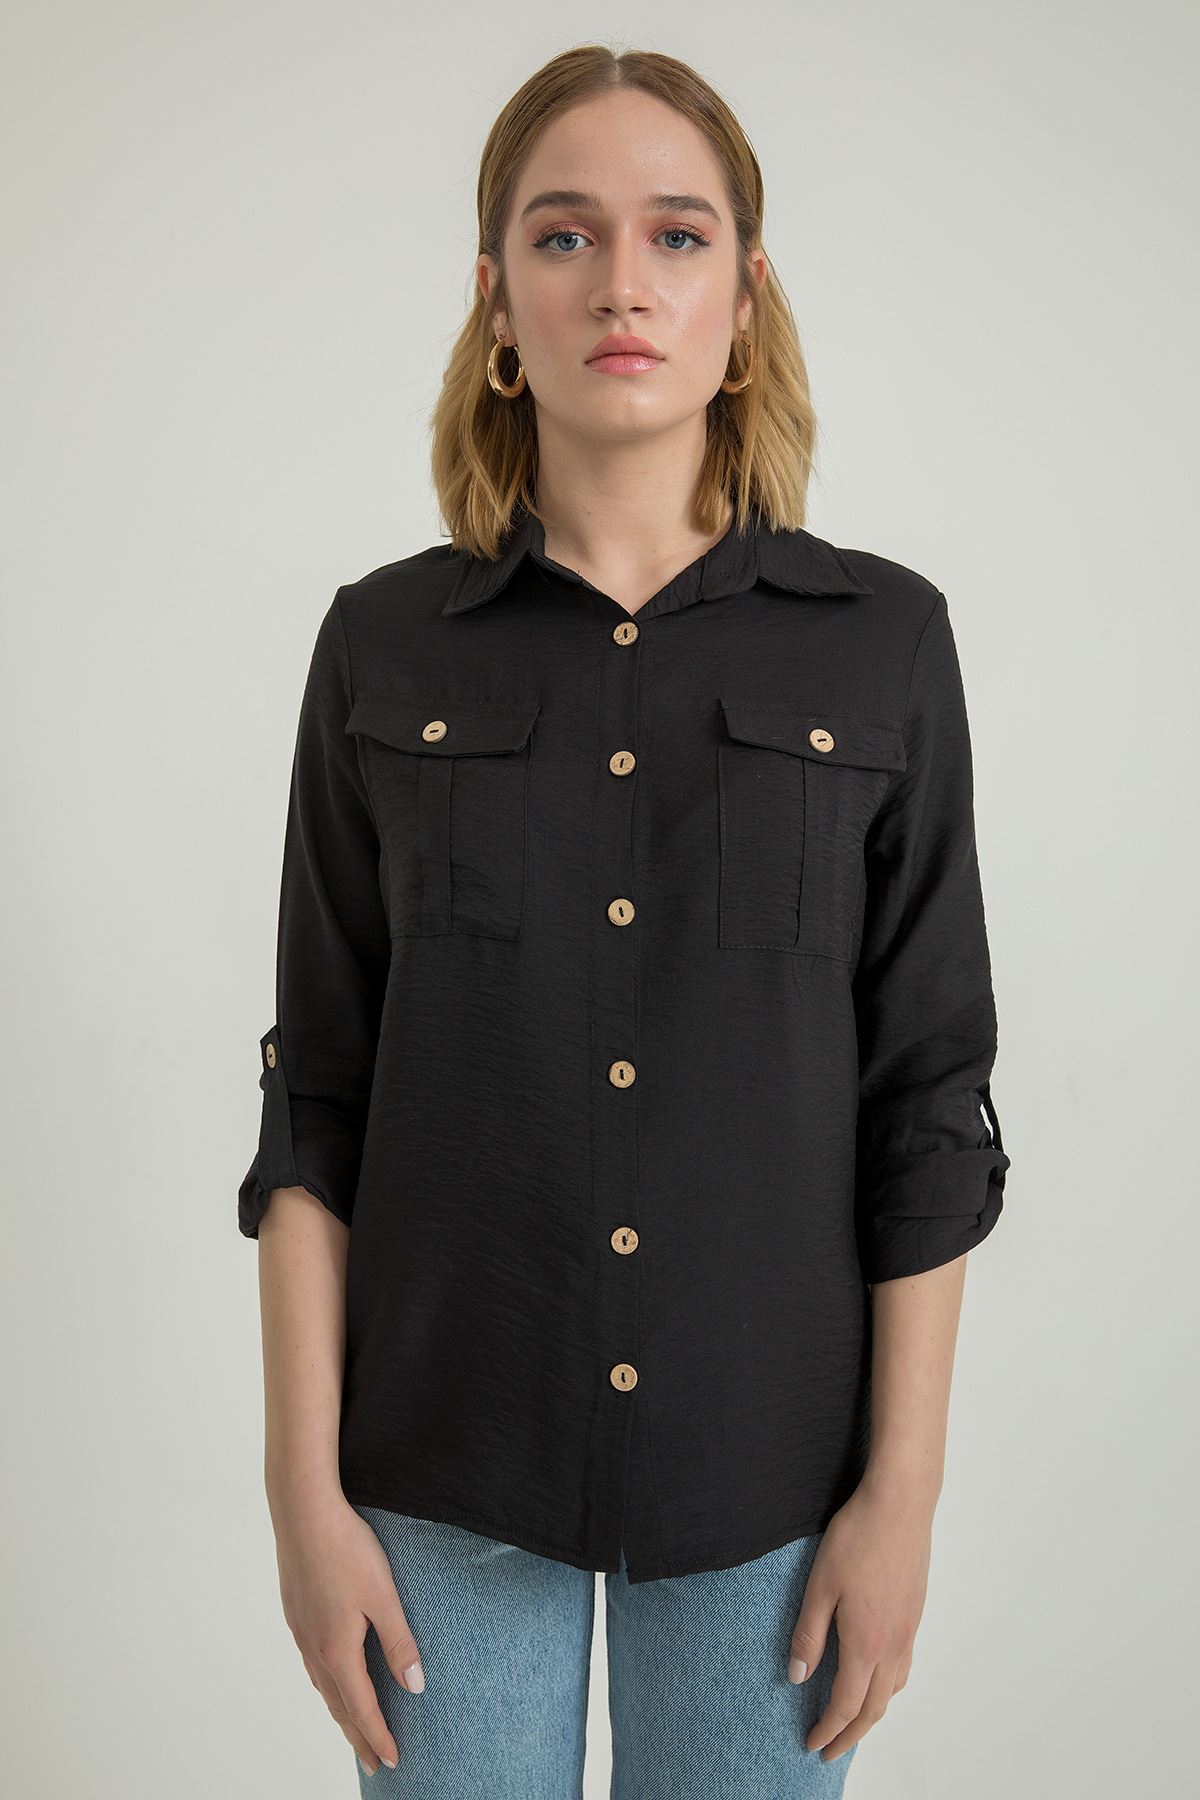 Aerobin Fabric Long Sleeve Shirt Collar Below Hip Full Fit Women'S Shirt - Black